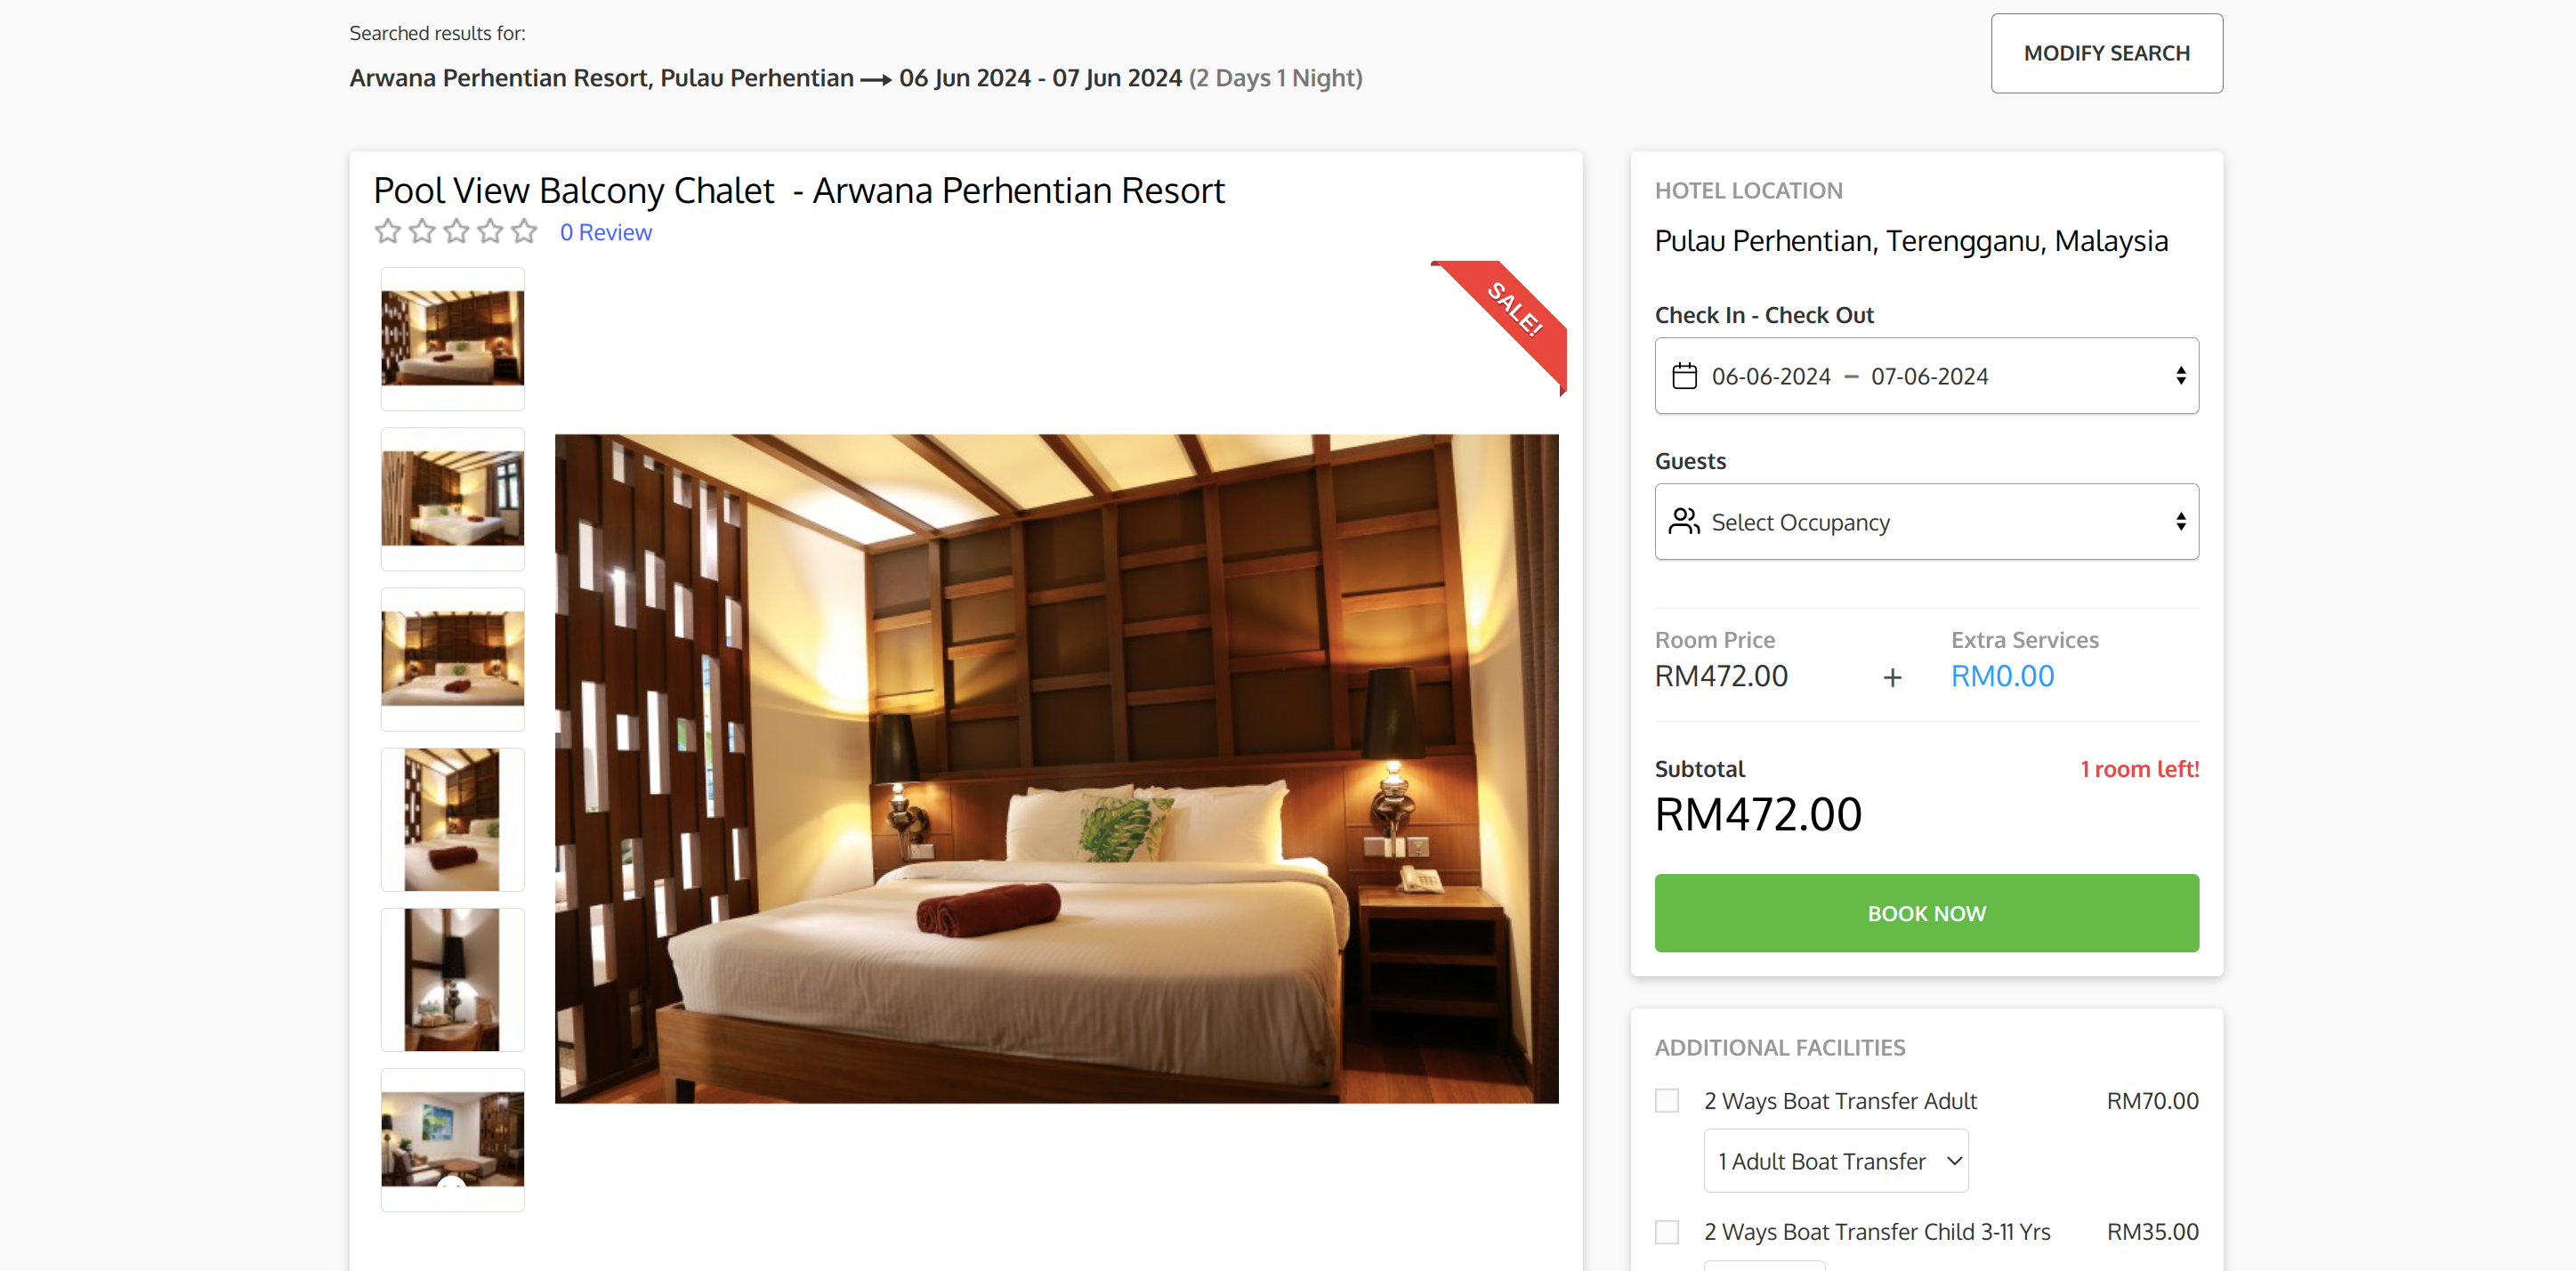 Room information page of Arwana Perhentian Resort booking website